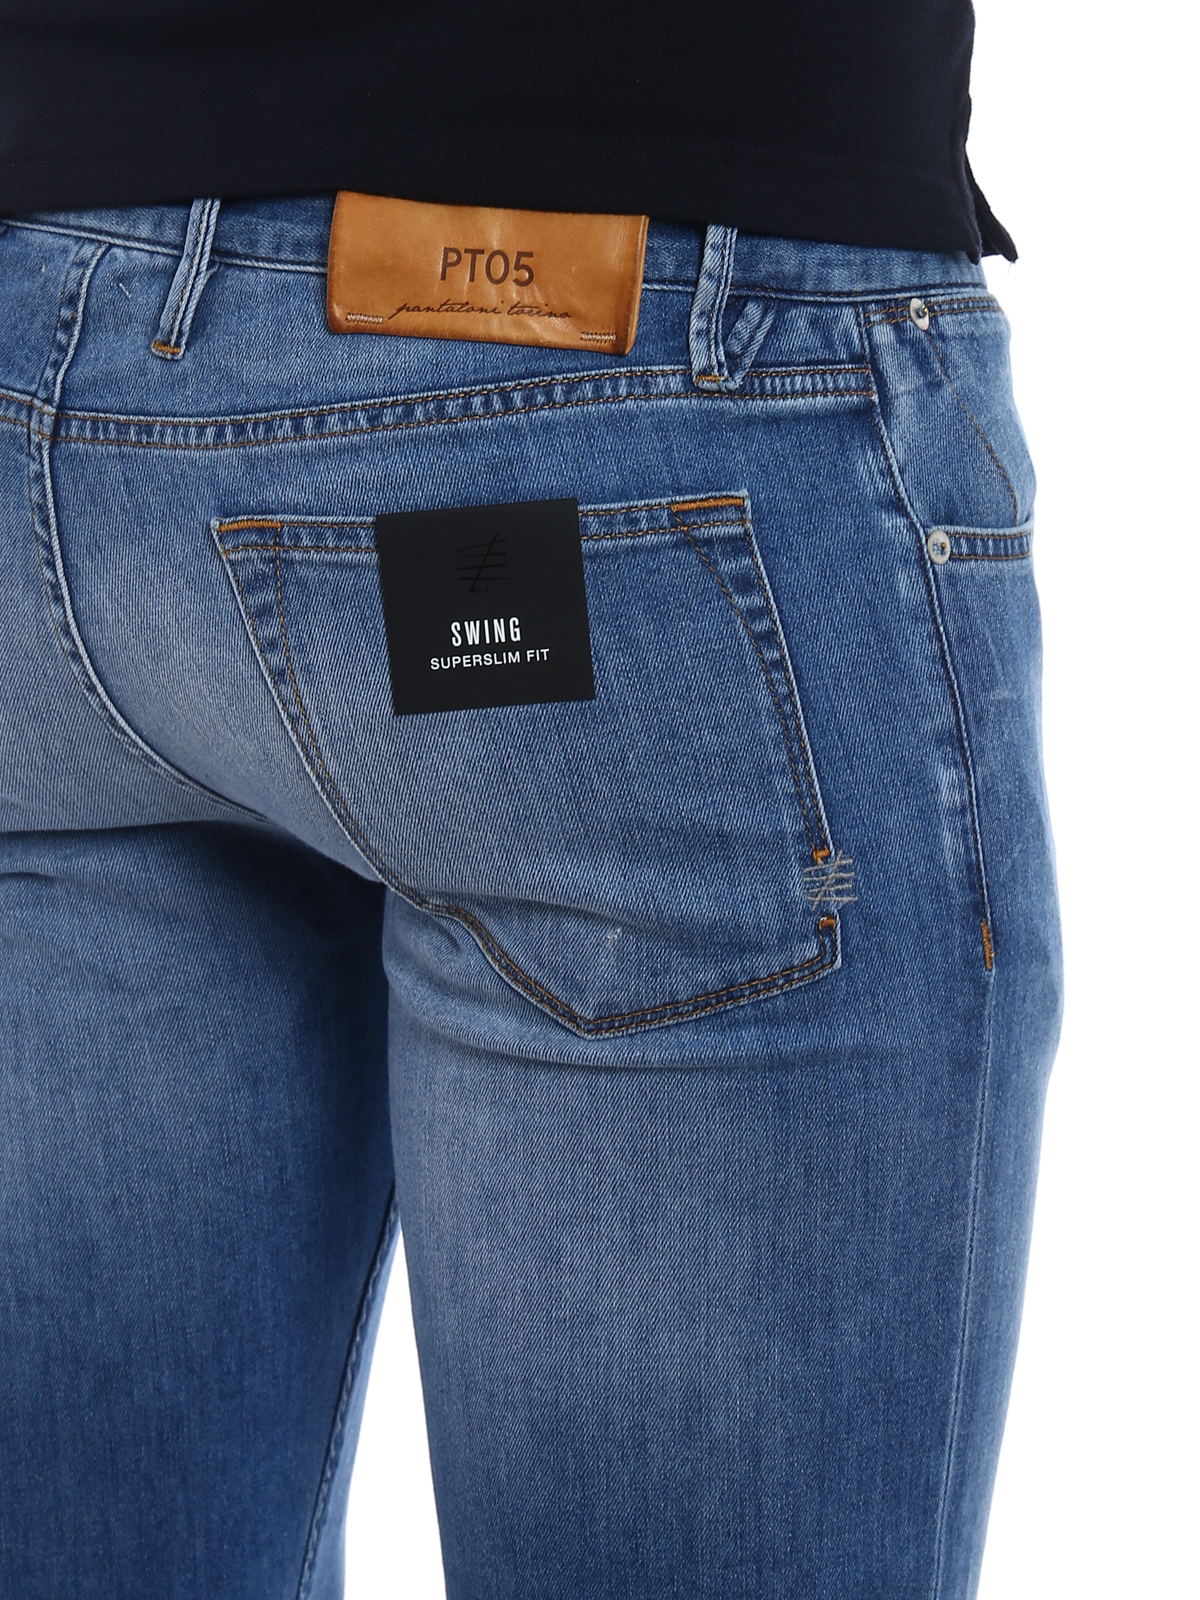 Straight leg jeans Pt Torino - Swing super slim fit jeans